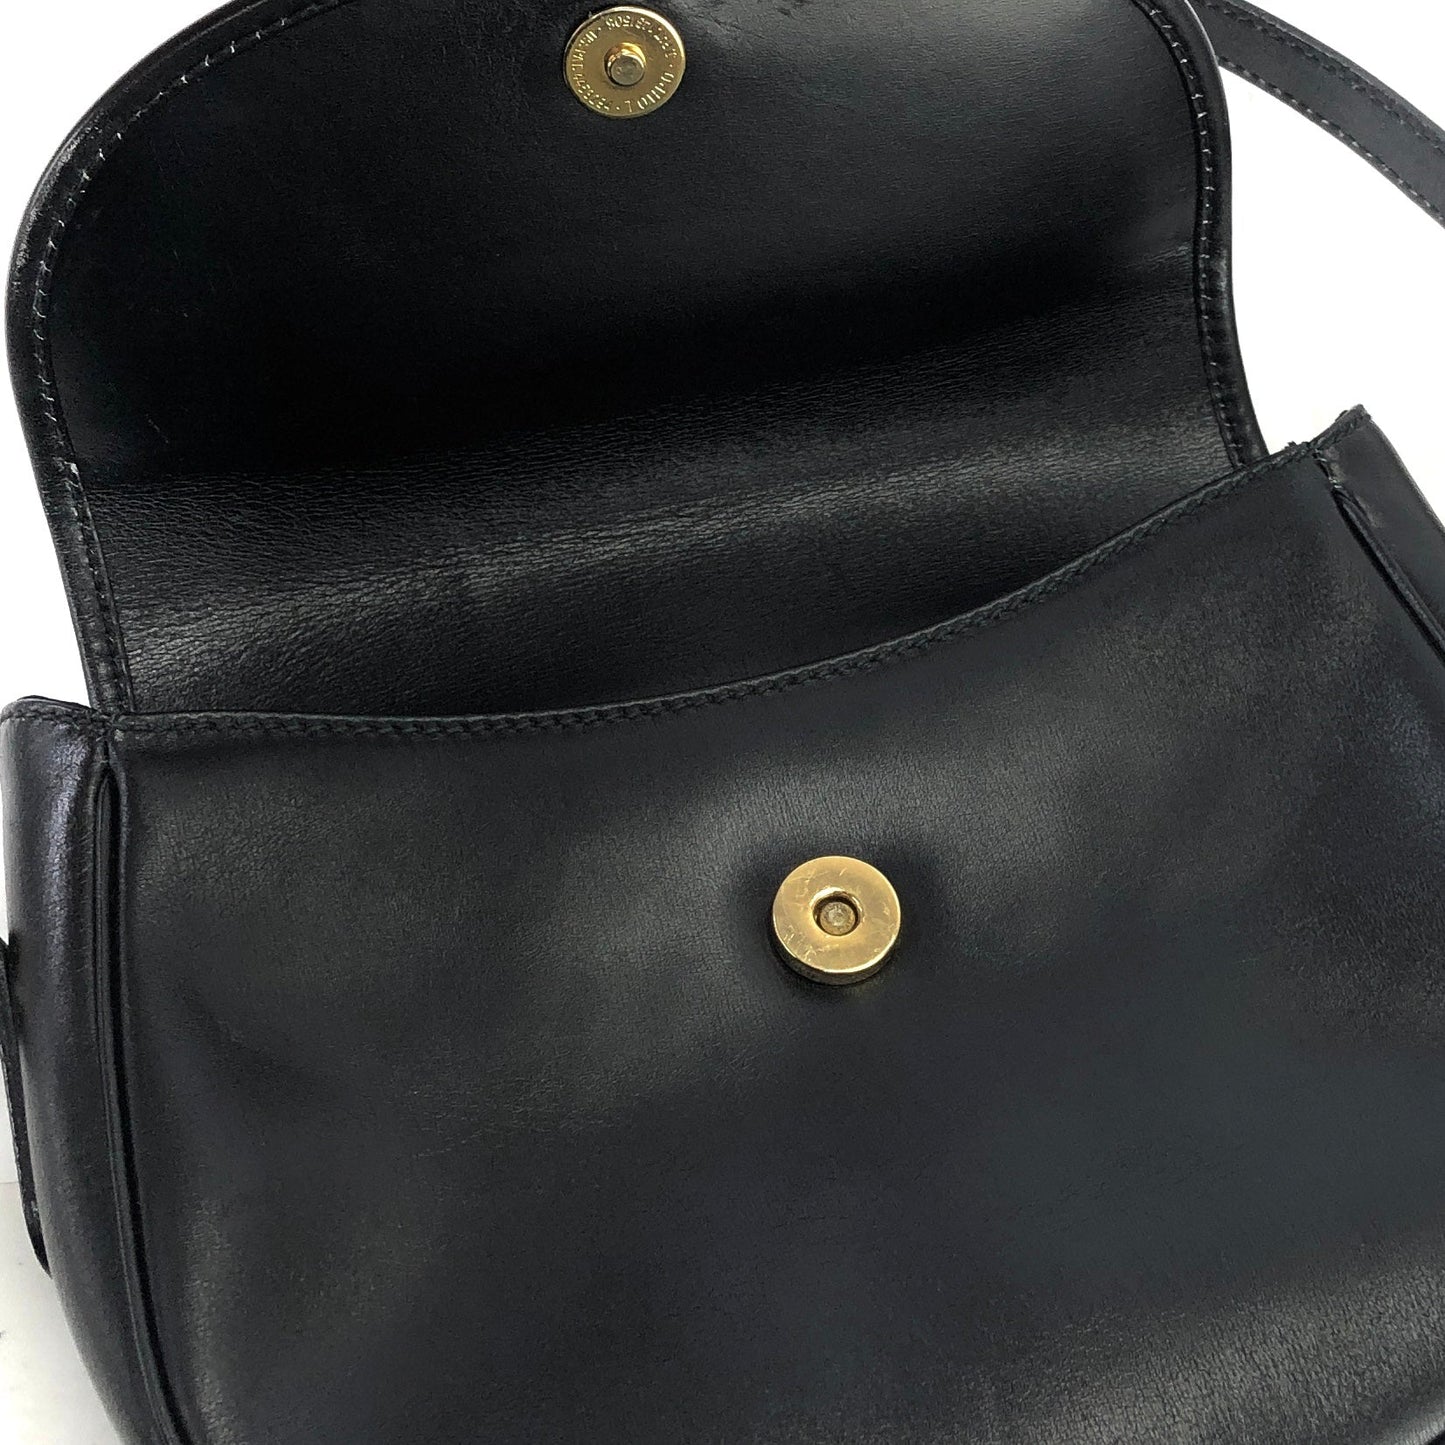 GUCCI Logo Leather Round Crossbody Shoulder bag Black Old gucci Vintage cby5c3